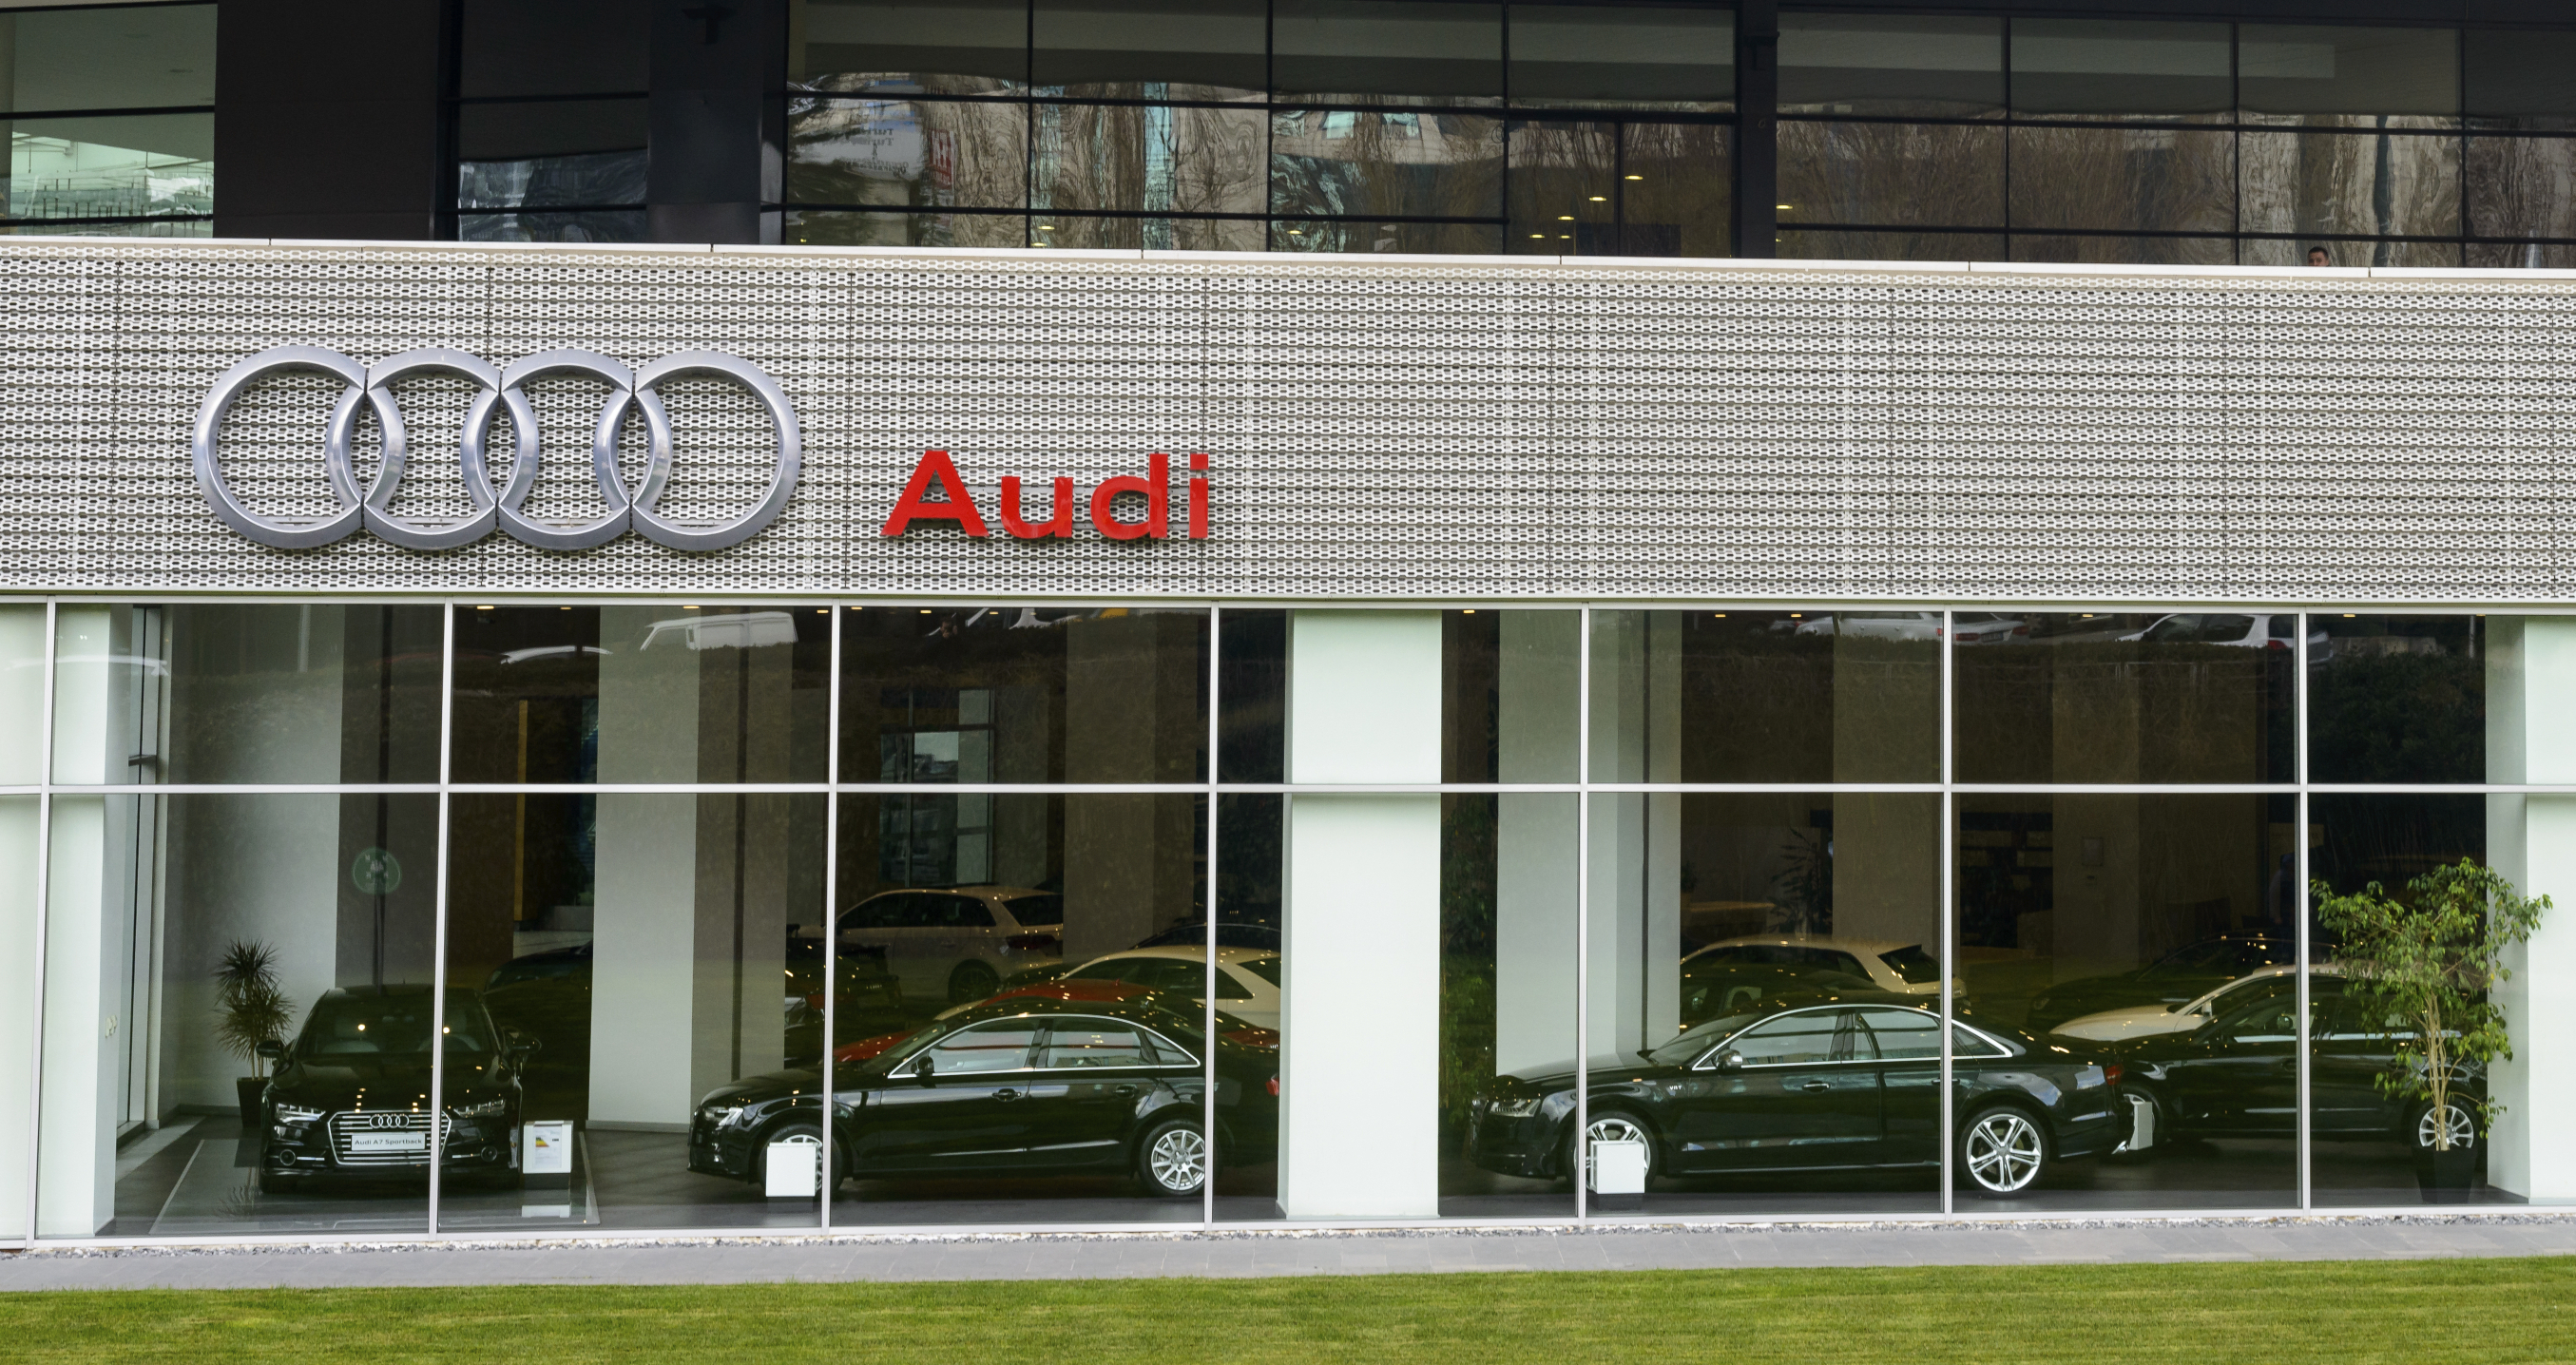 Audi luxury car dealership with various Audi models inside